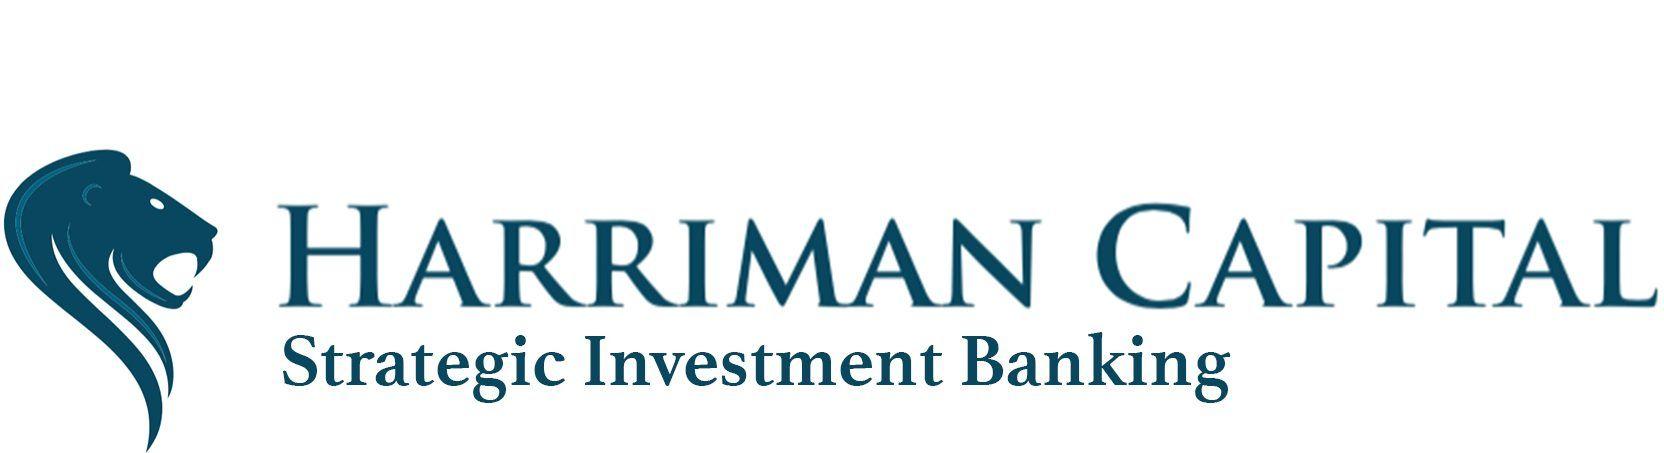 Investment Banking Logo - Harriman Capital | Strategic Investment Banking